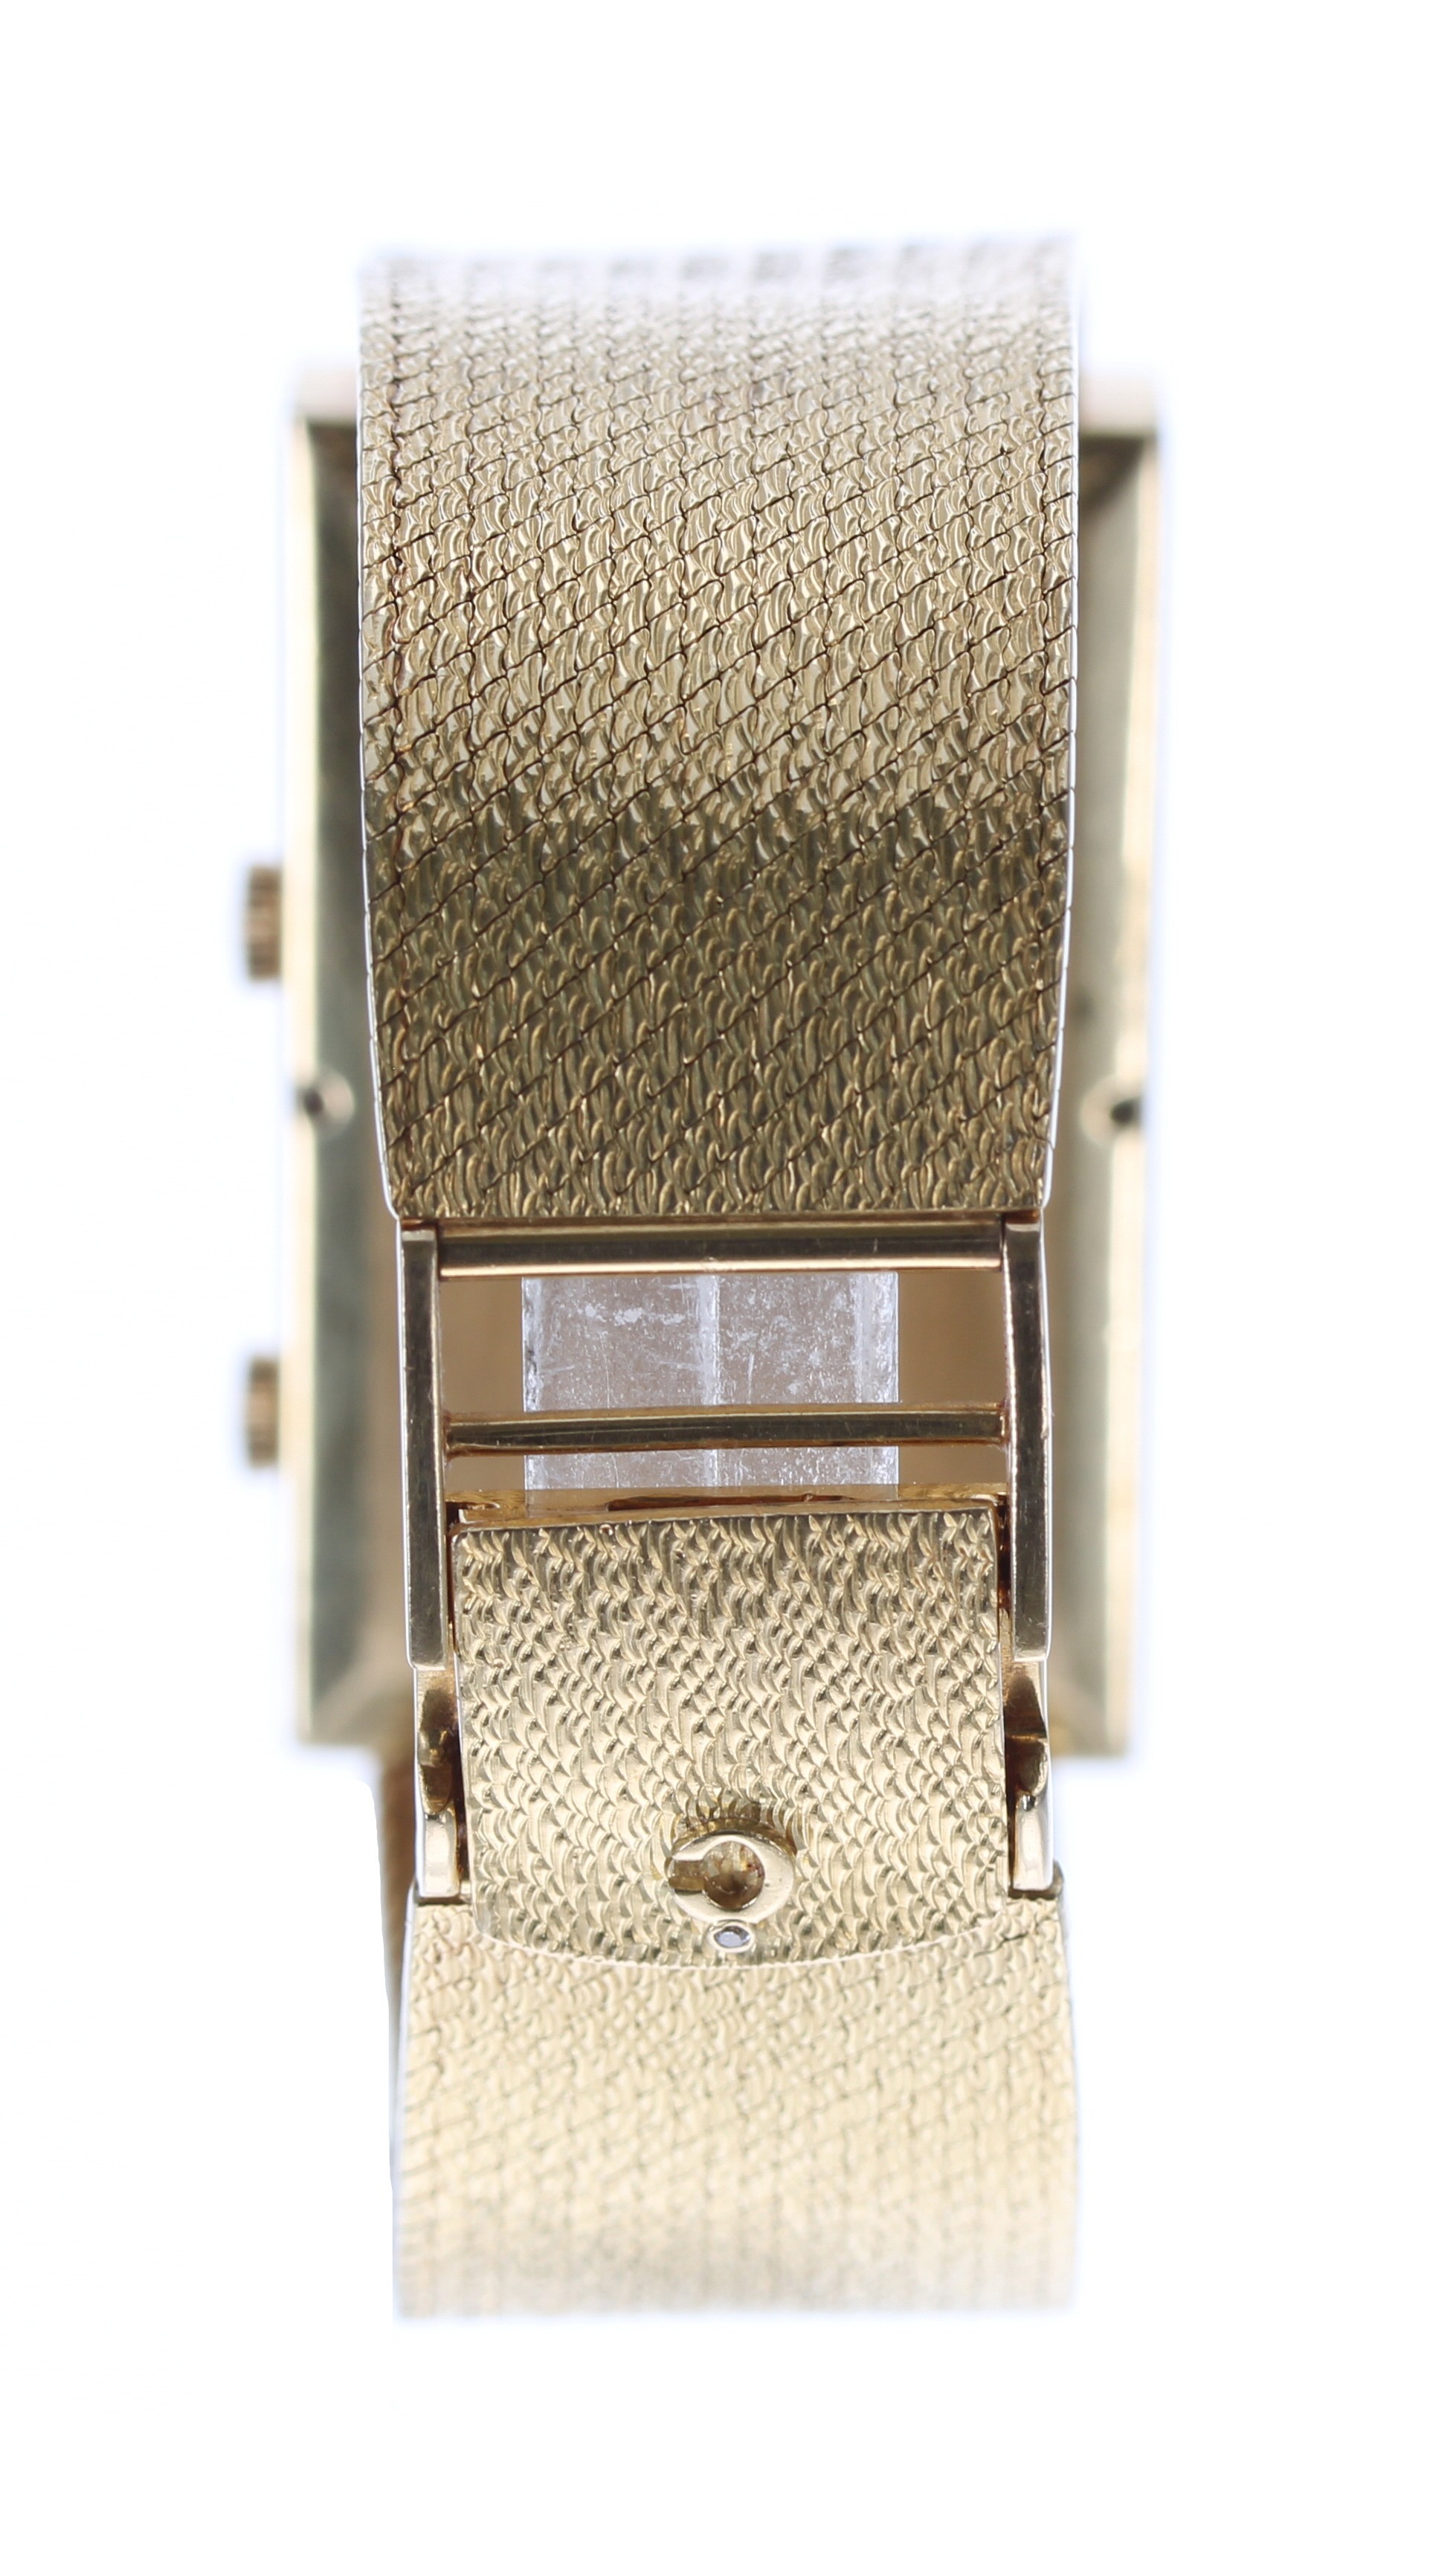 Chopard Genéve 18ct Dual Time Zone 18ct gentleman's wristwatch, ref. 50931, serial no. 138xxx, circa - Image 4 of 5